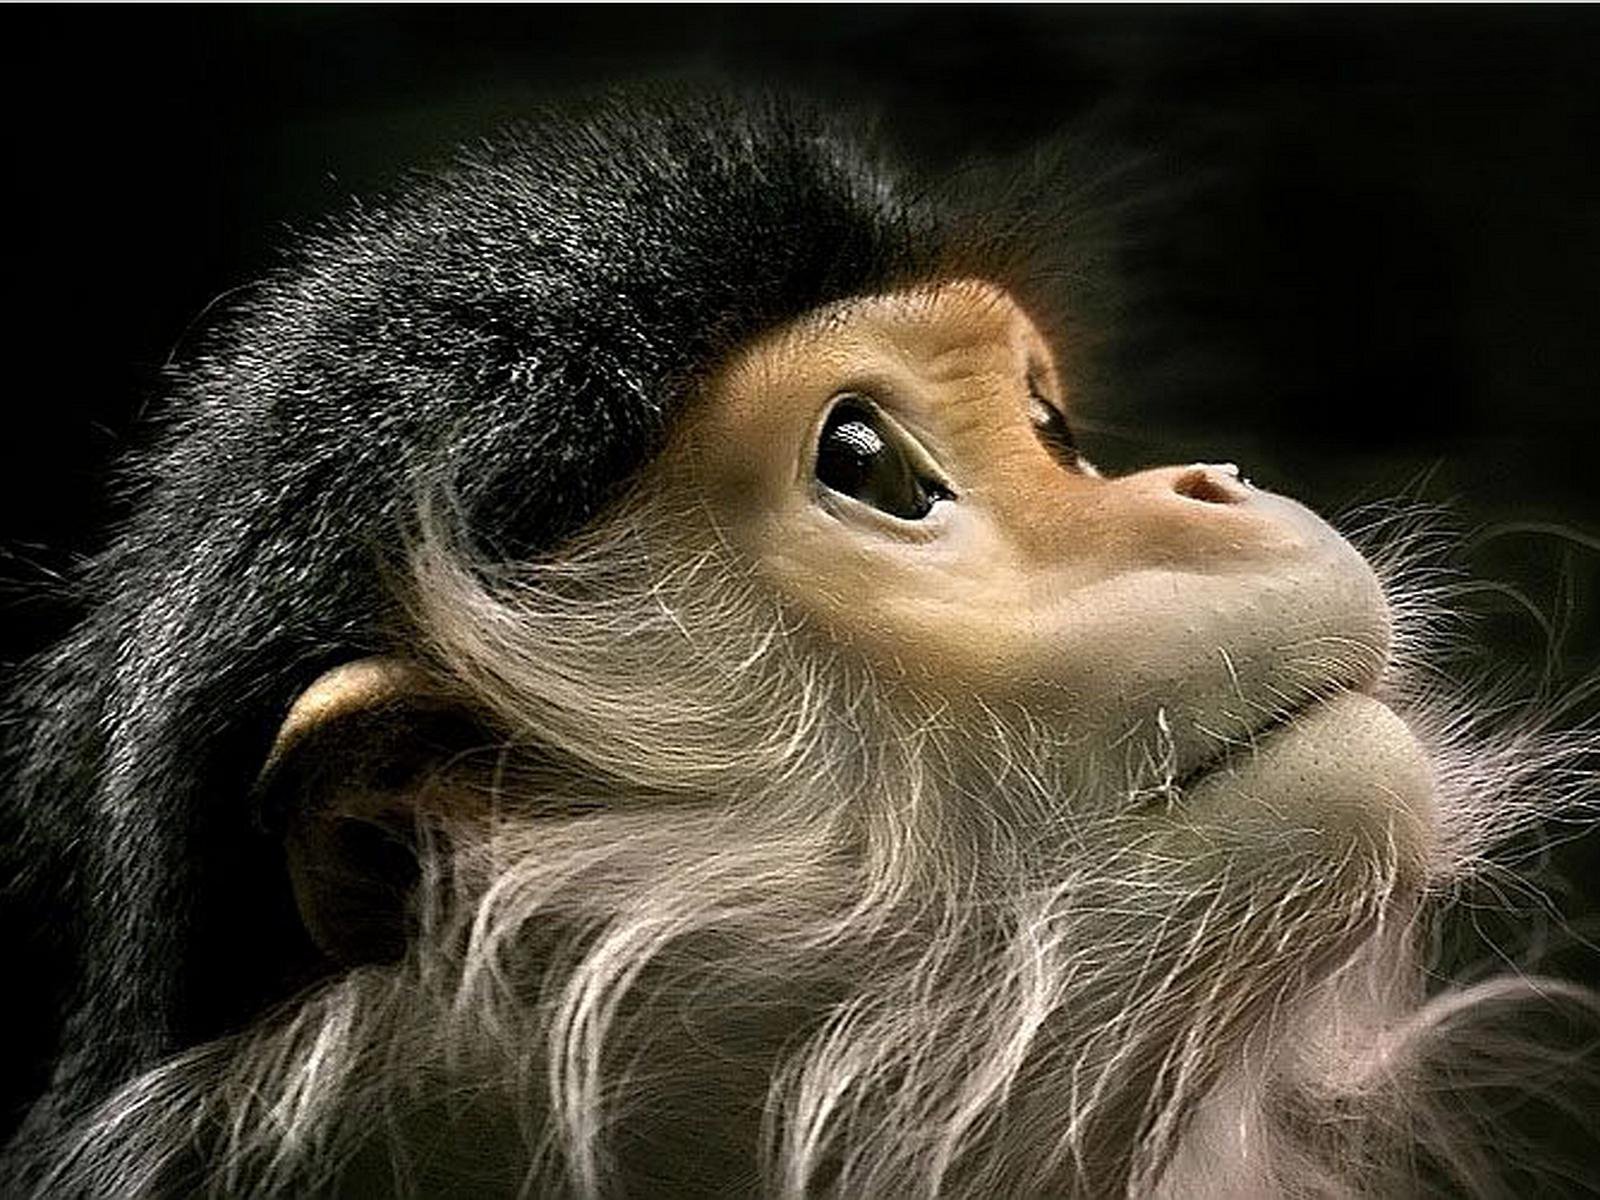 Hear animal. Обезьяна. Красивая обезьяна. Необычные обезьяны. Самая красивая обезьяна.